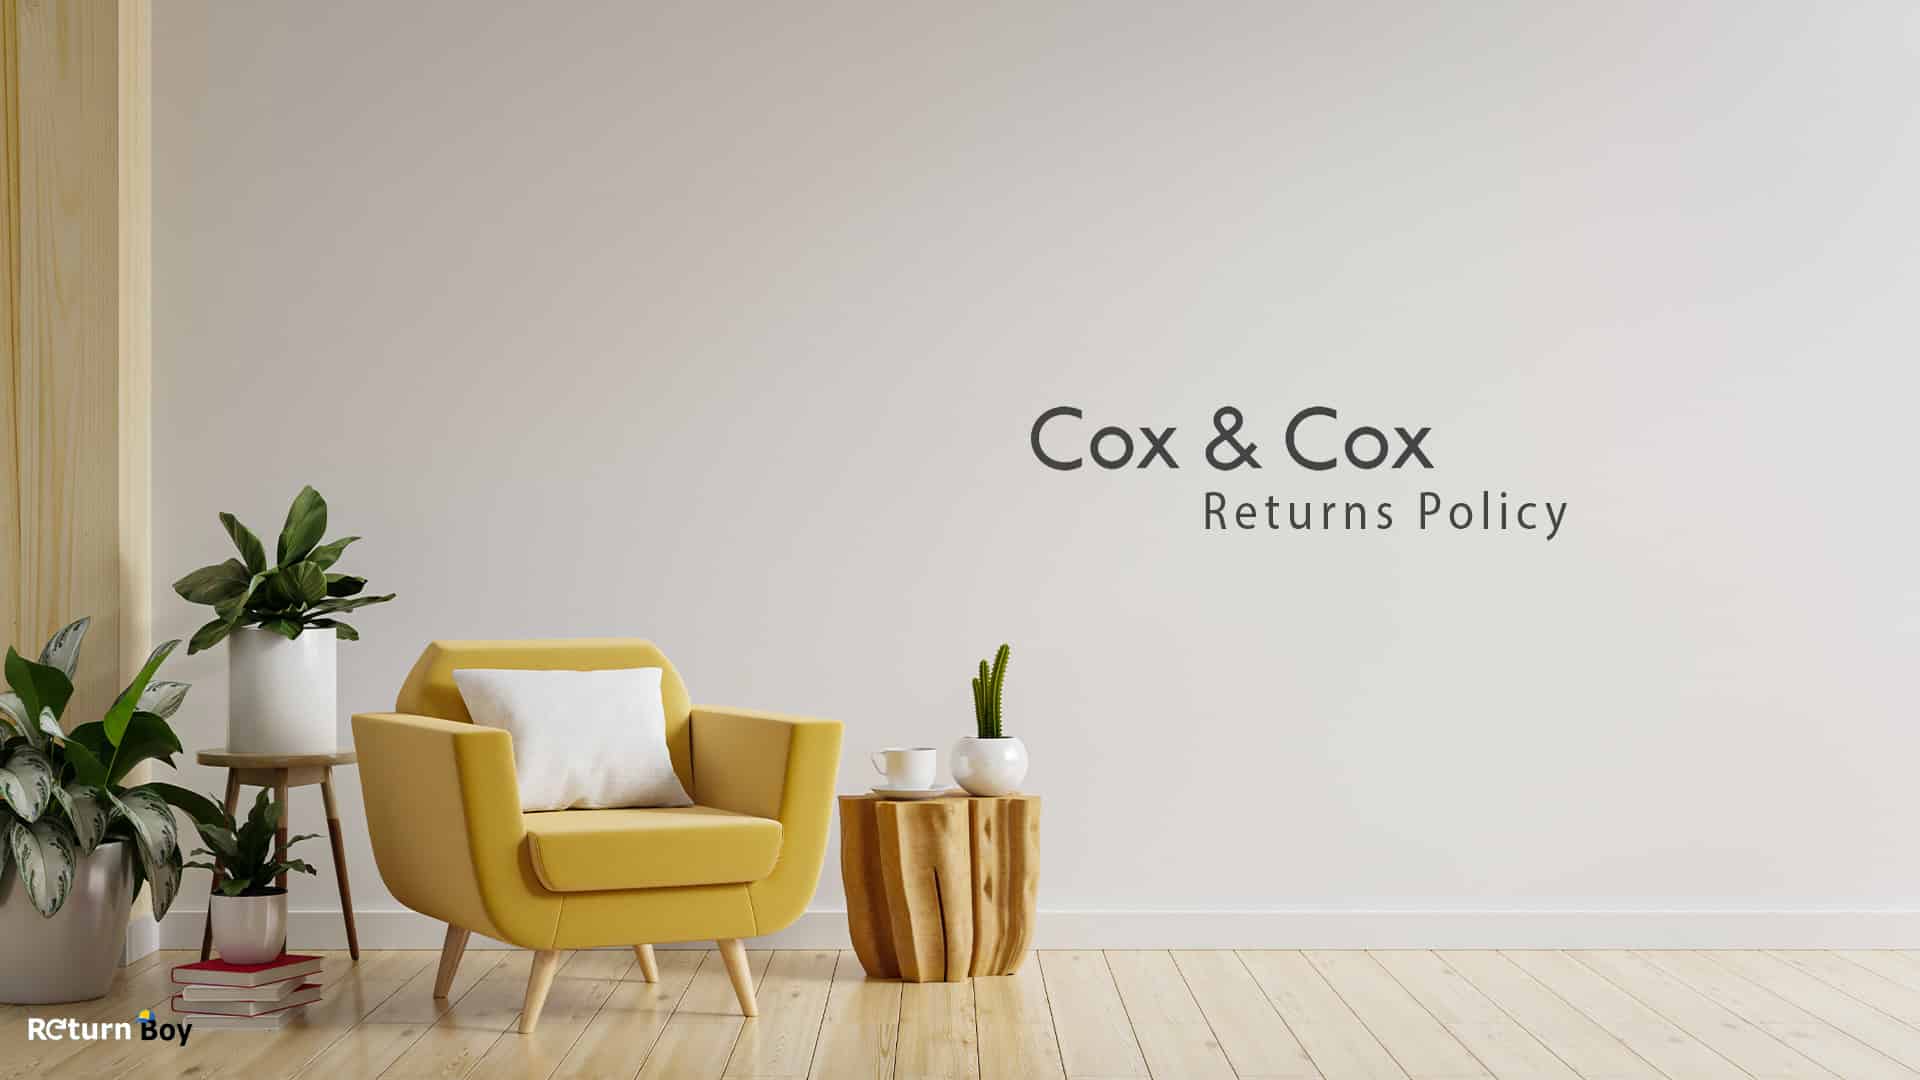 Cox & Cox Returns Policy